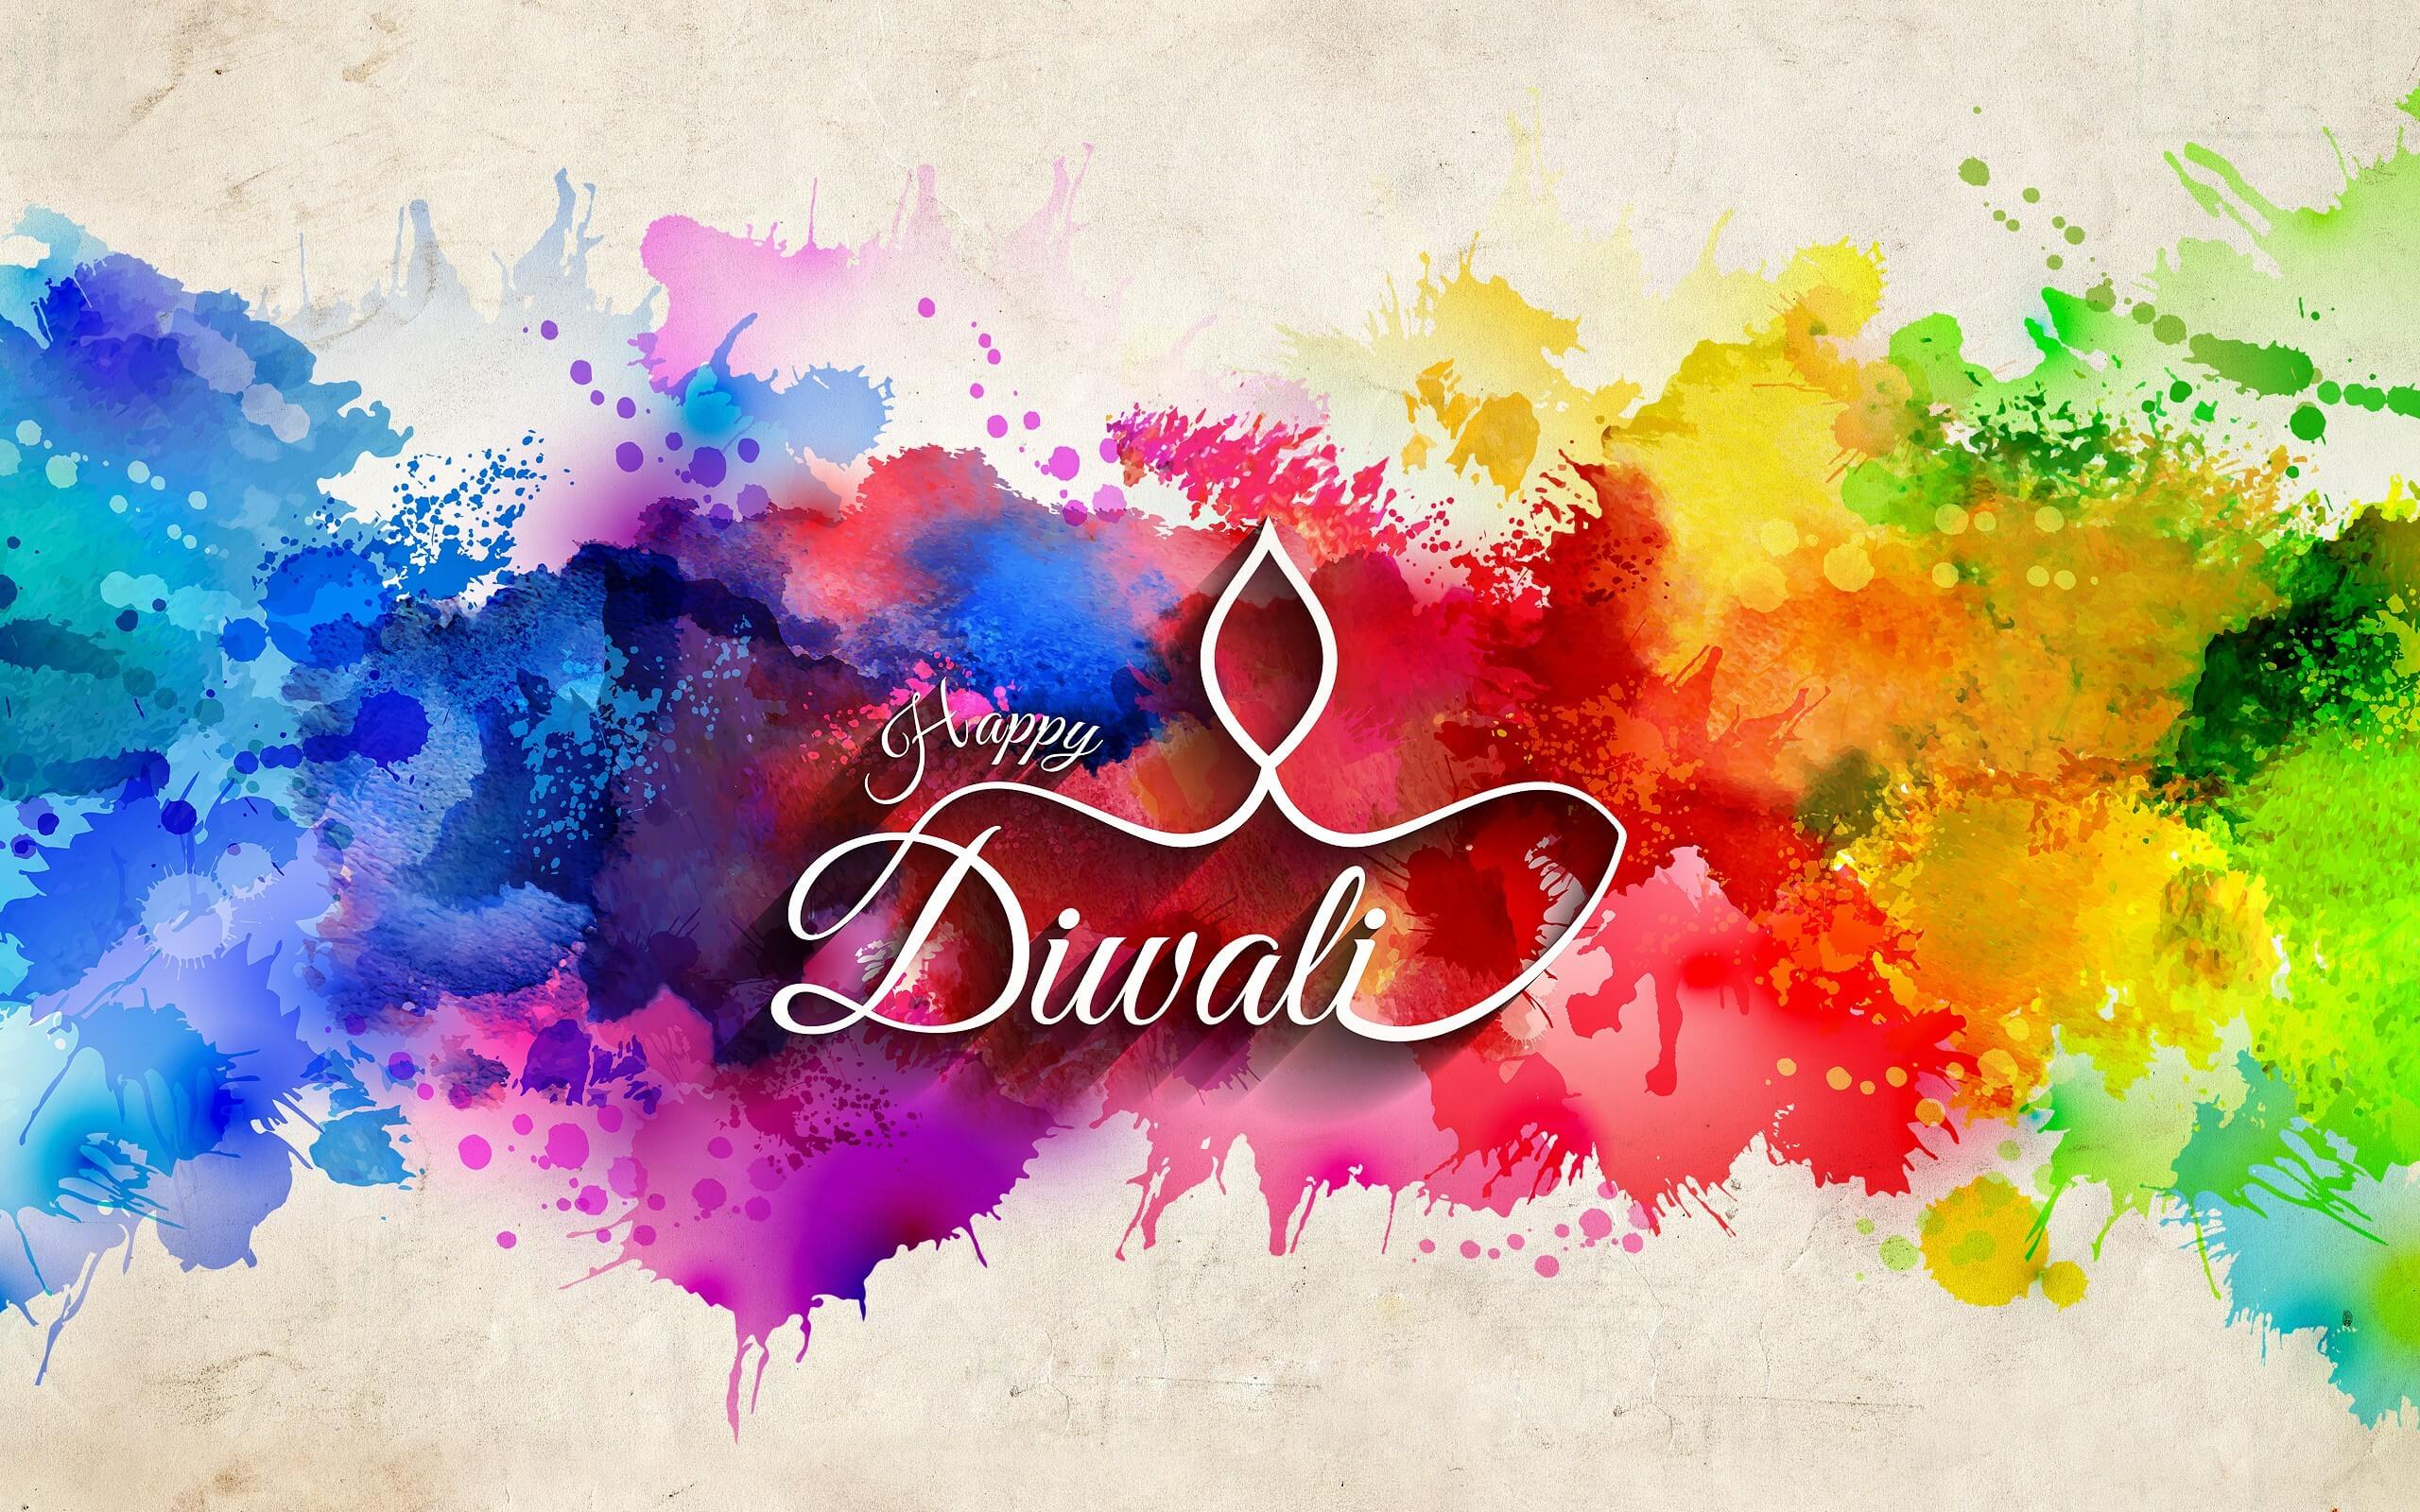 diwali wallpaper for mobile,watercolor paint,text,graphic design,font,illustration